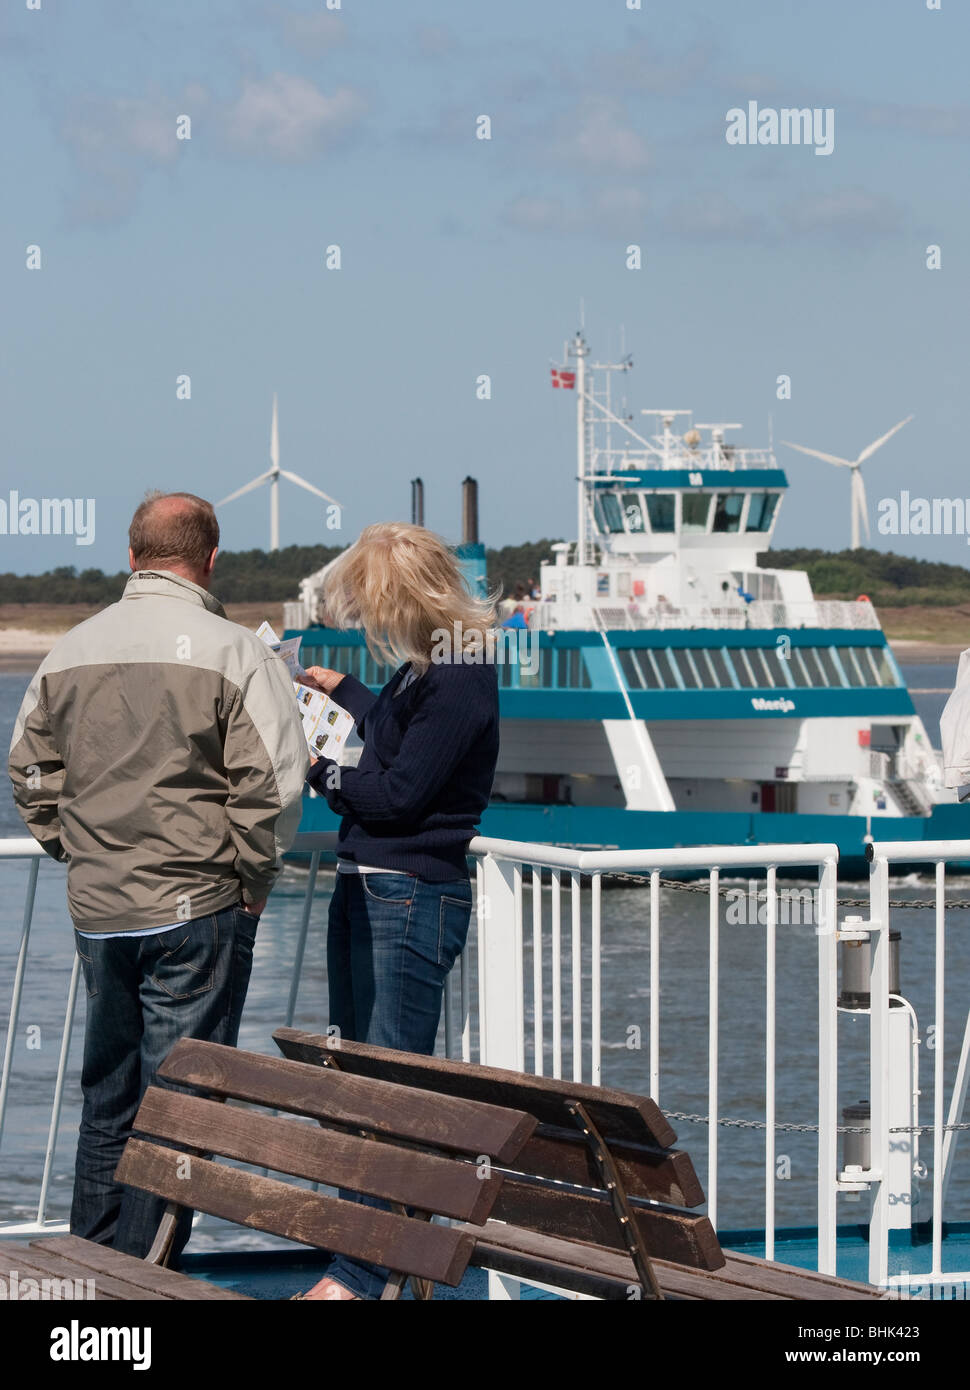 Passengers on a Danish domestic ferry. Stock Photo